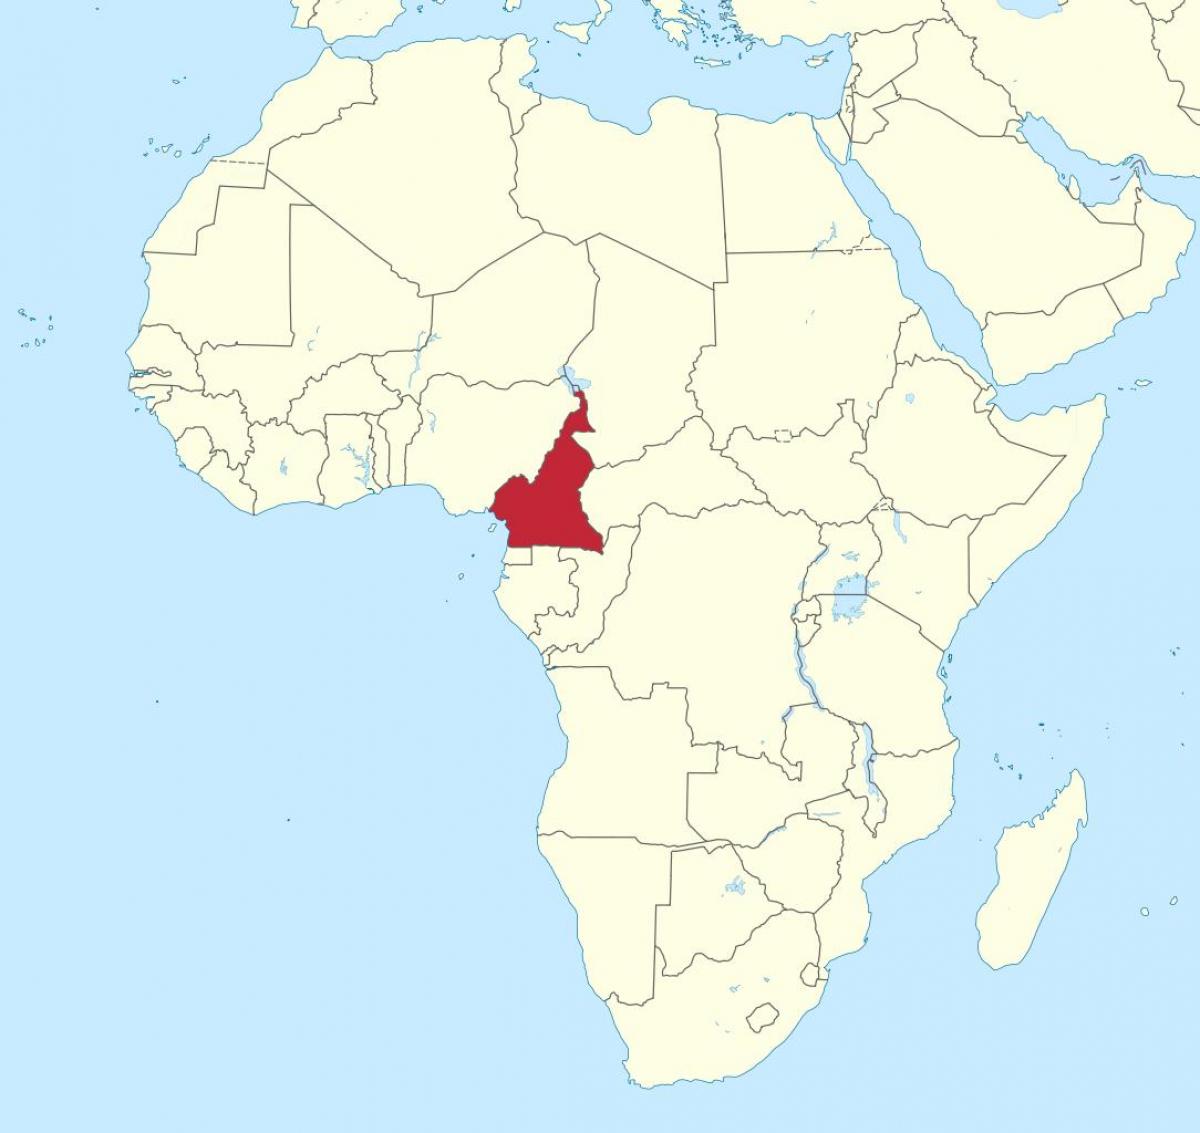 Mappa del Camerun, africa occidentale